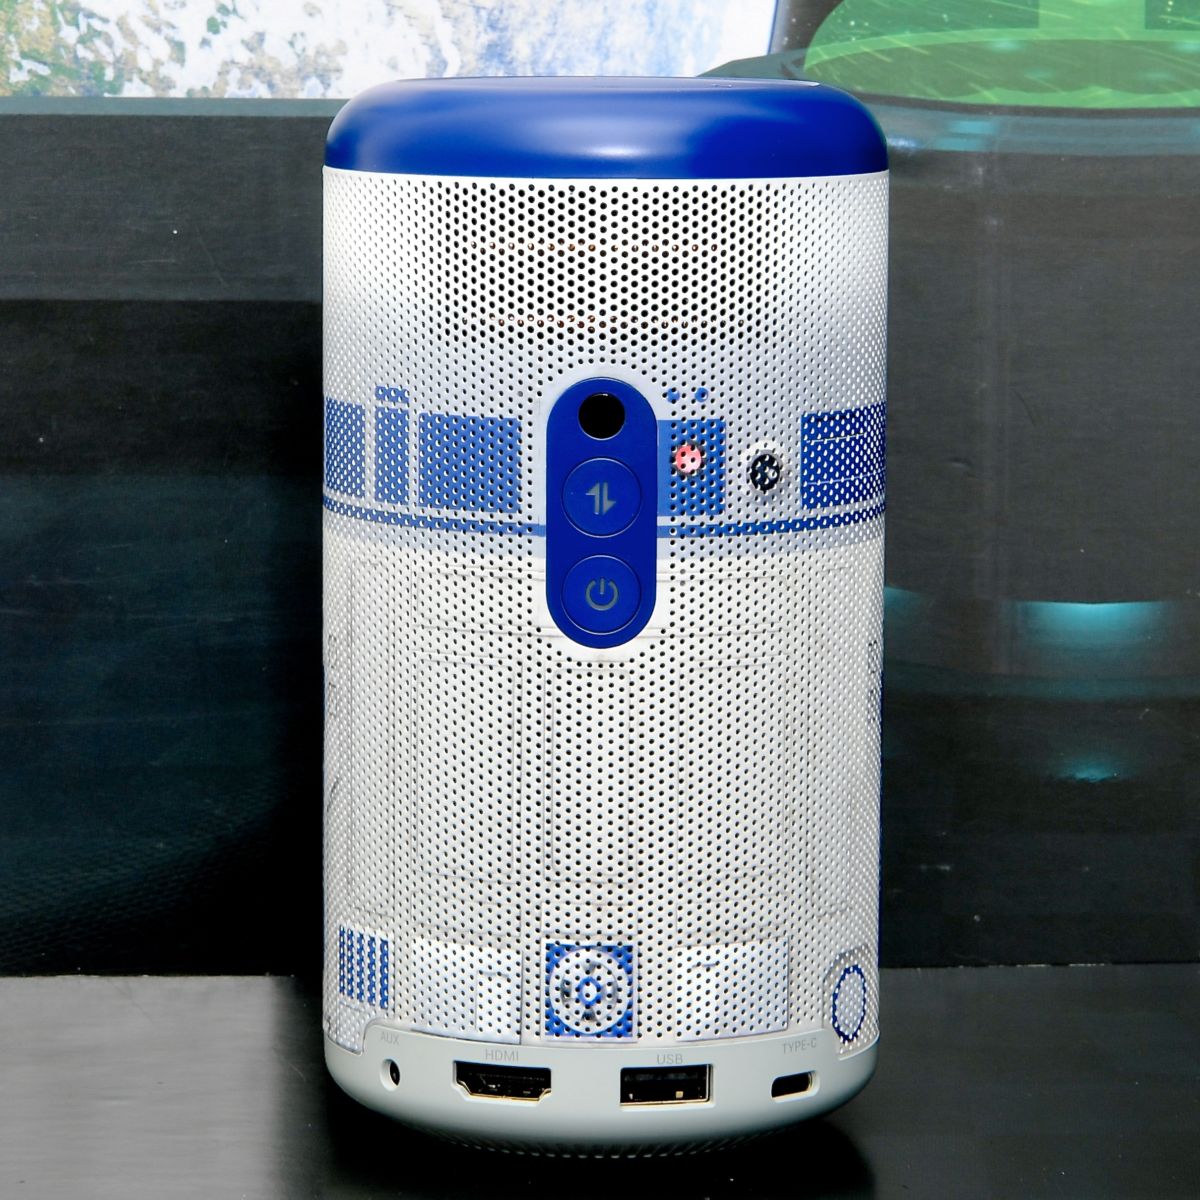 Anker Nebula Capsule II R2-D2 Edition 後面 | 「R2-D2」デザインのモバイルプロジェクター